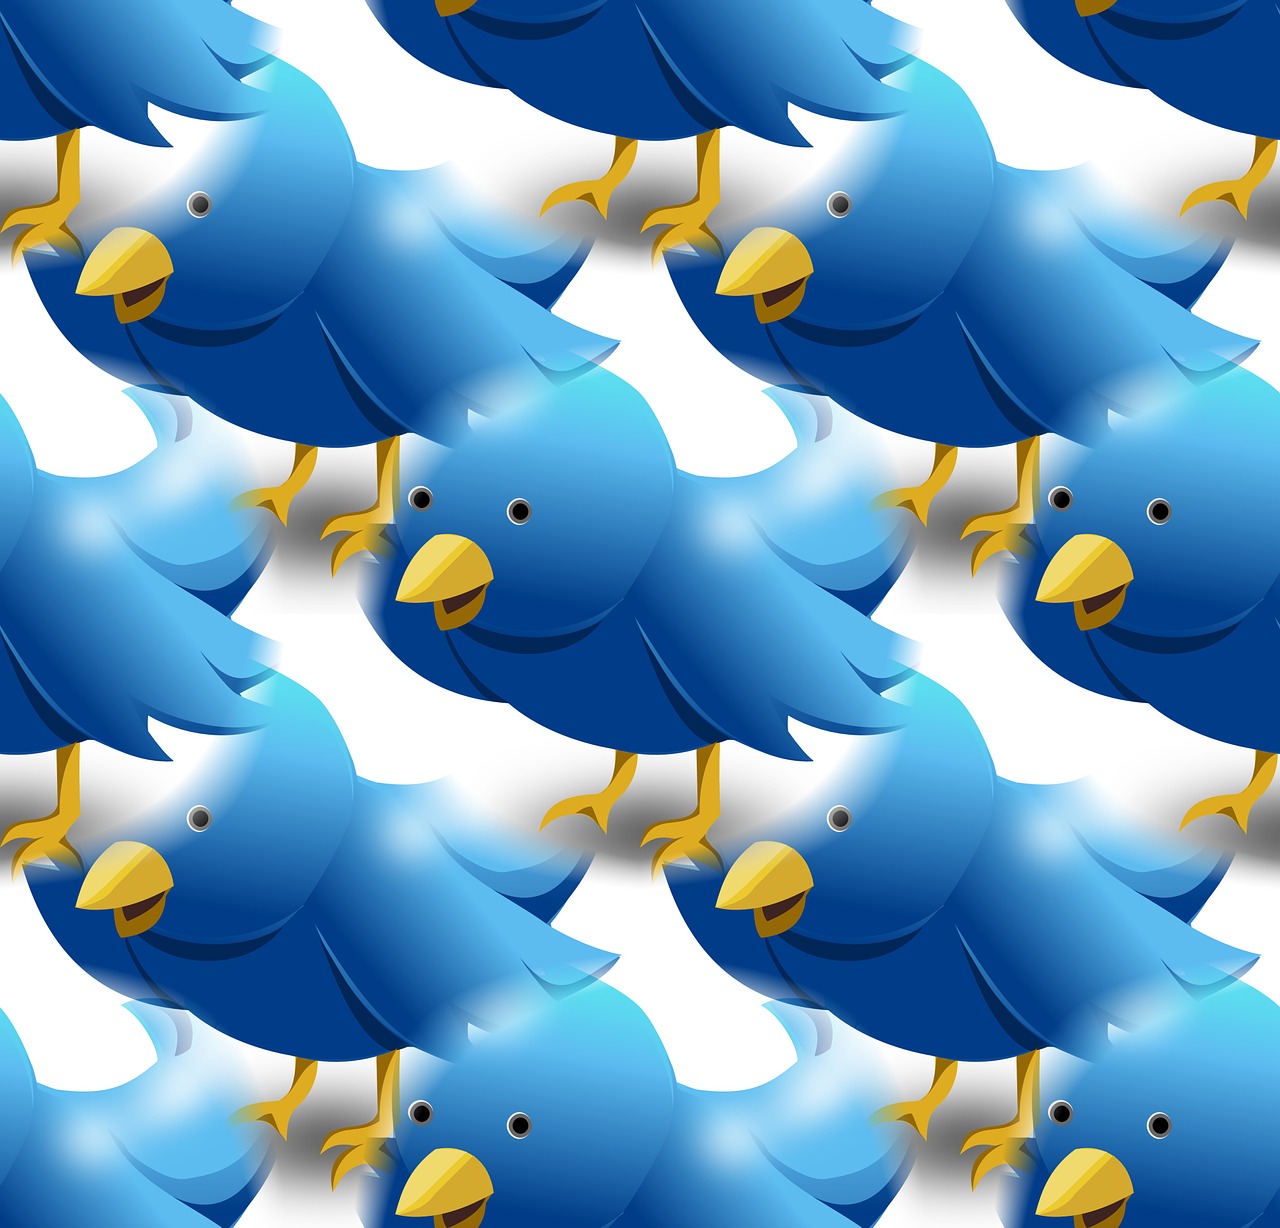 Twitter, Twitter Modelis, Twitter Piktograma, Čivināšana, Paukštis, Mėlynas, Twitter Images, Modelis, Fonas, Dalijimasis